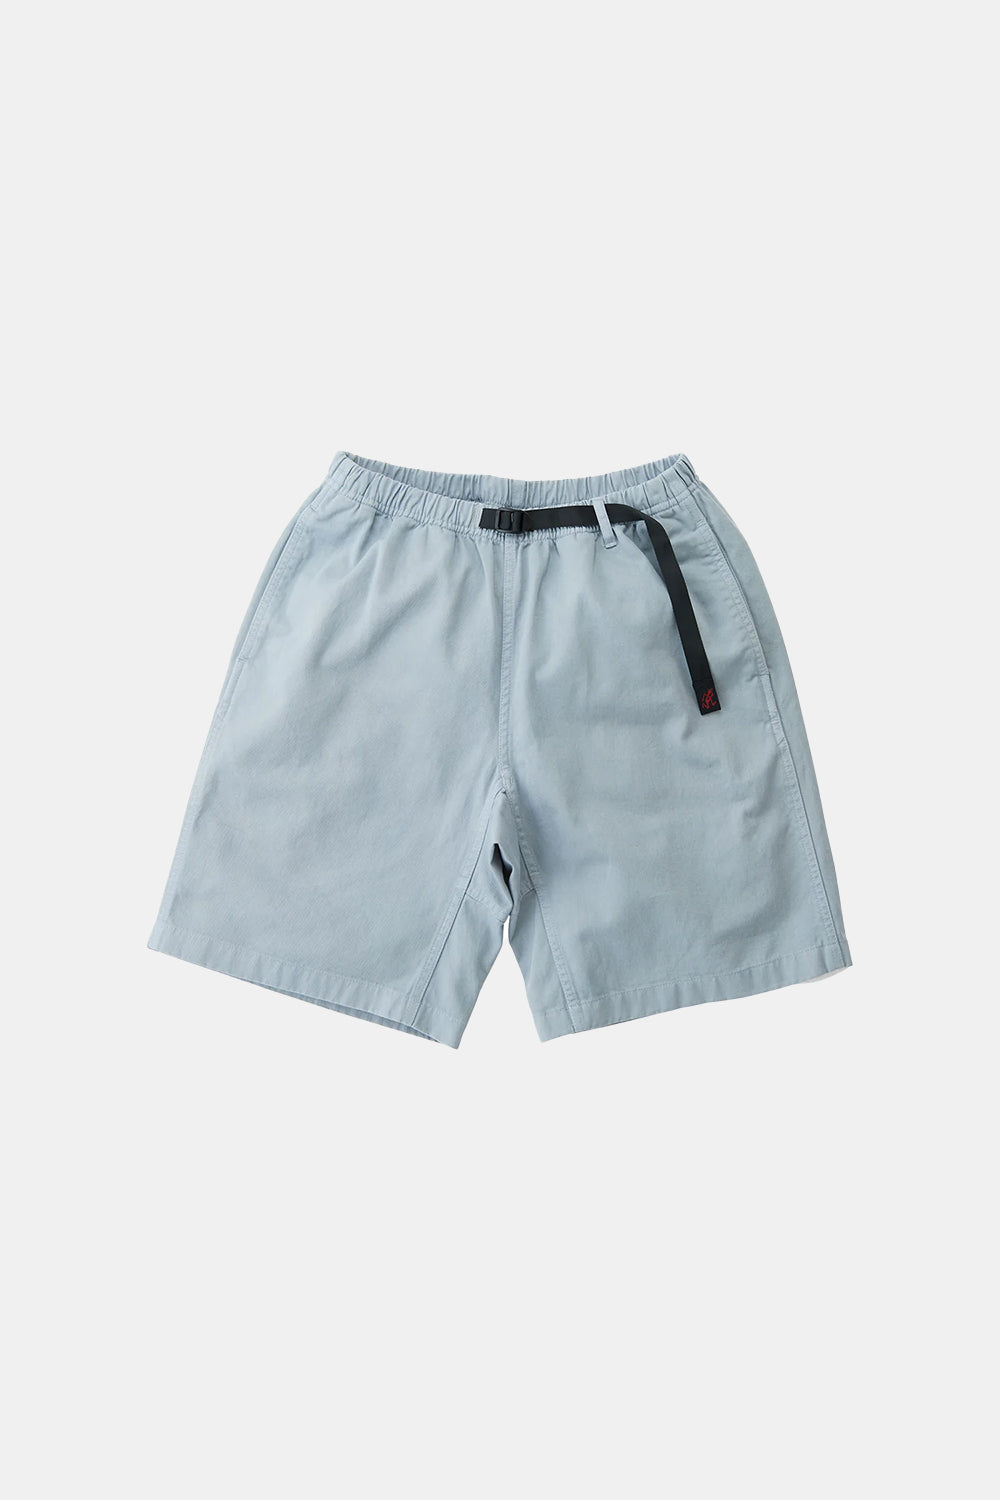 Gramicci G-Shorts Double-Ringspun Organic Cotton Twill (Smokey Blue)